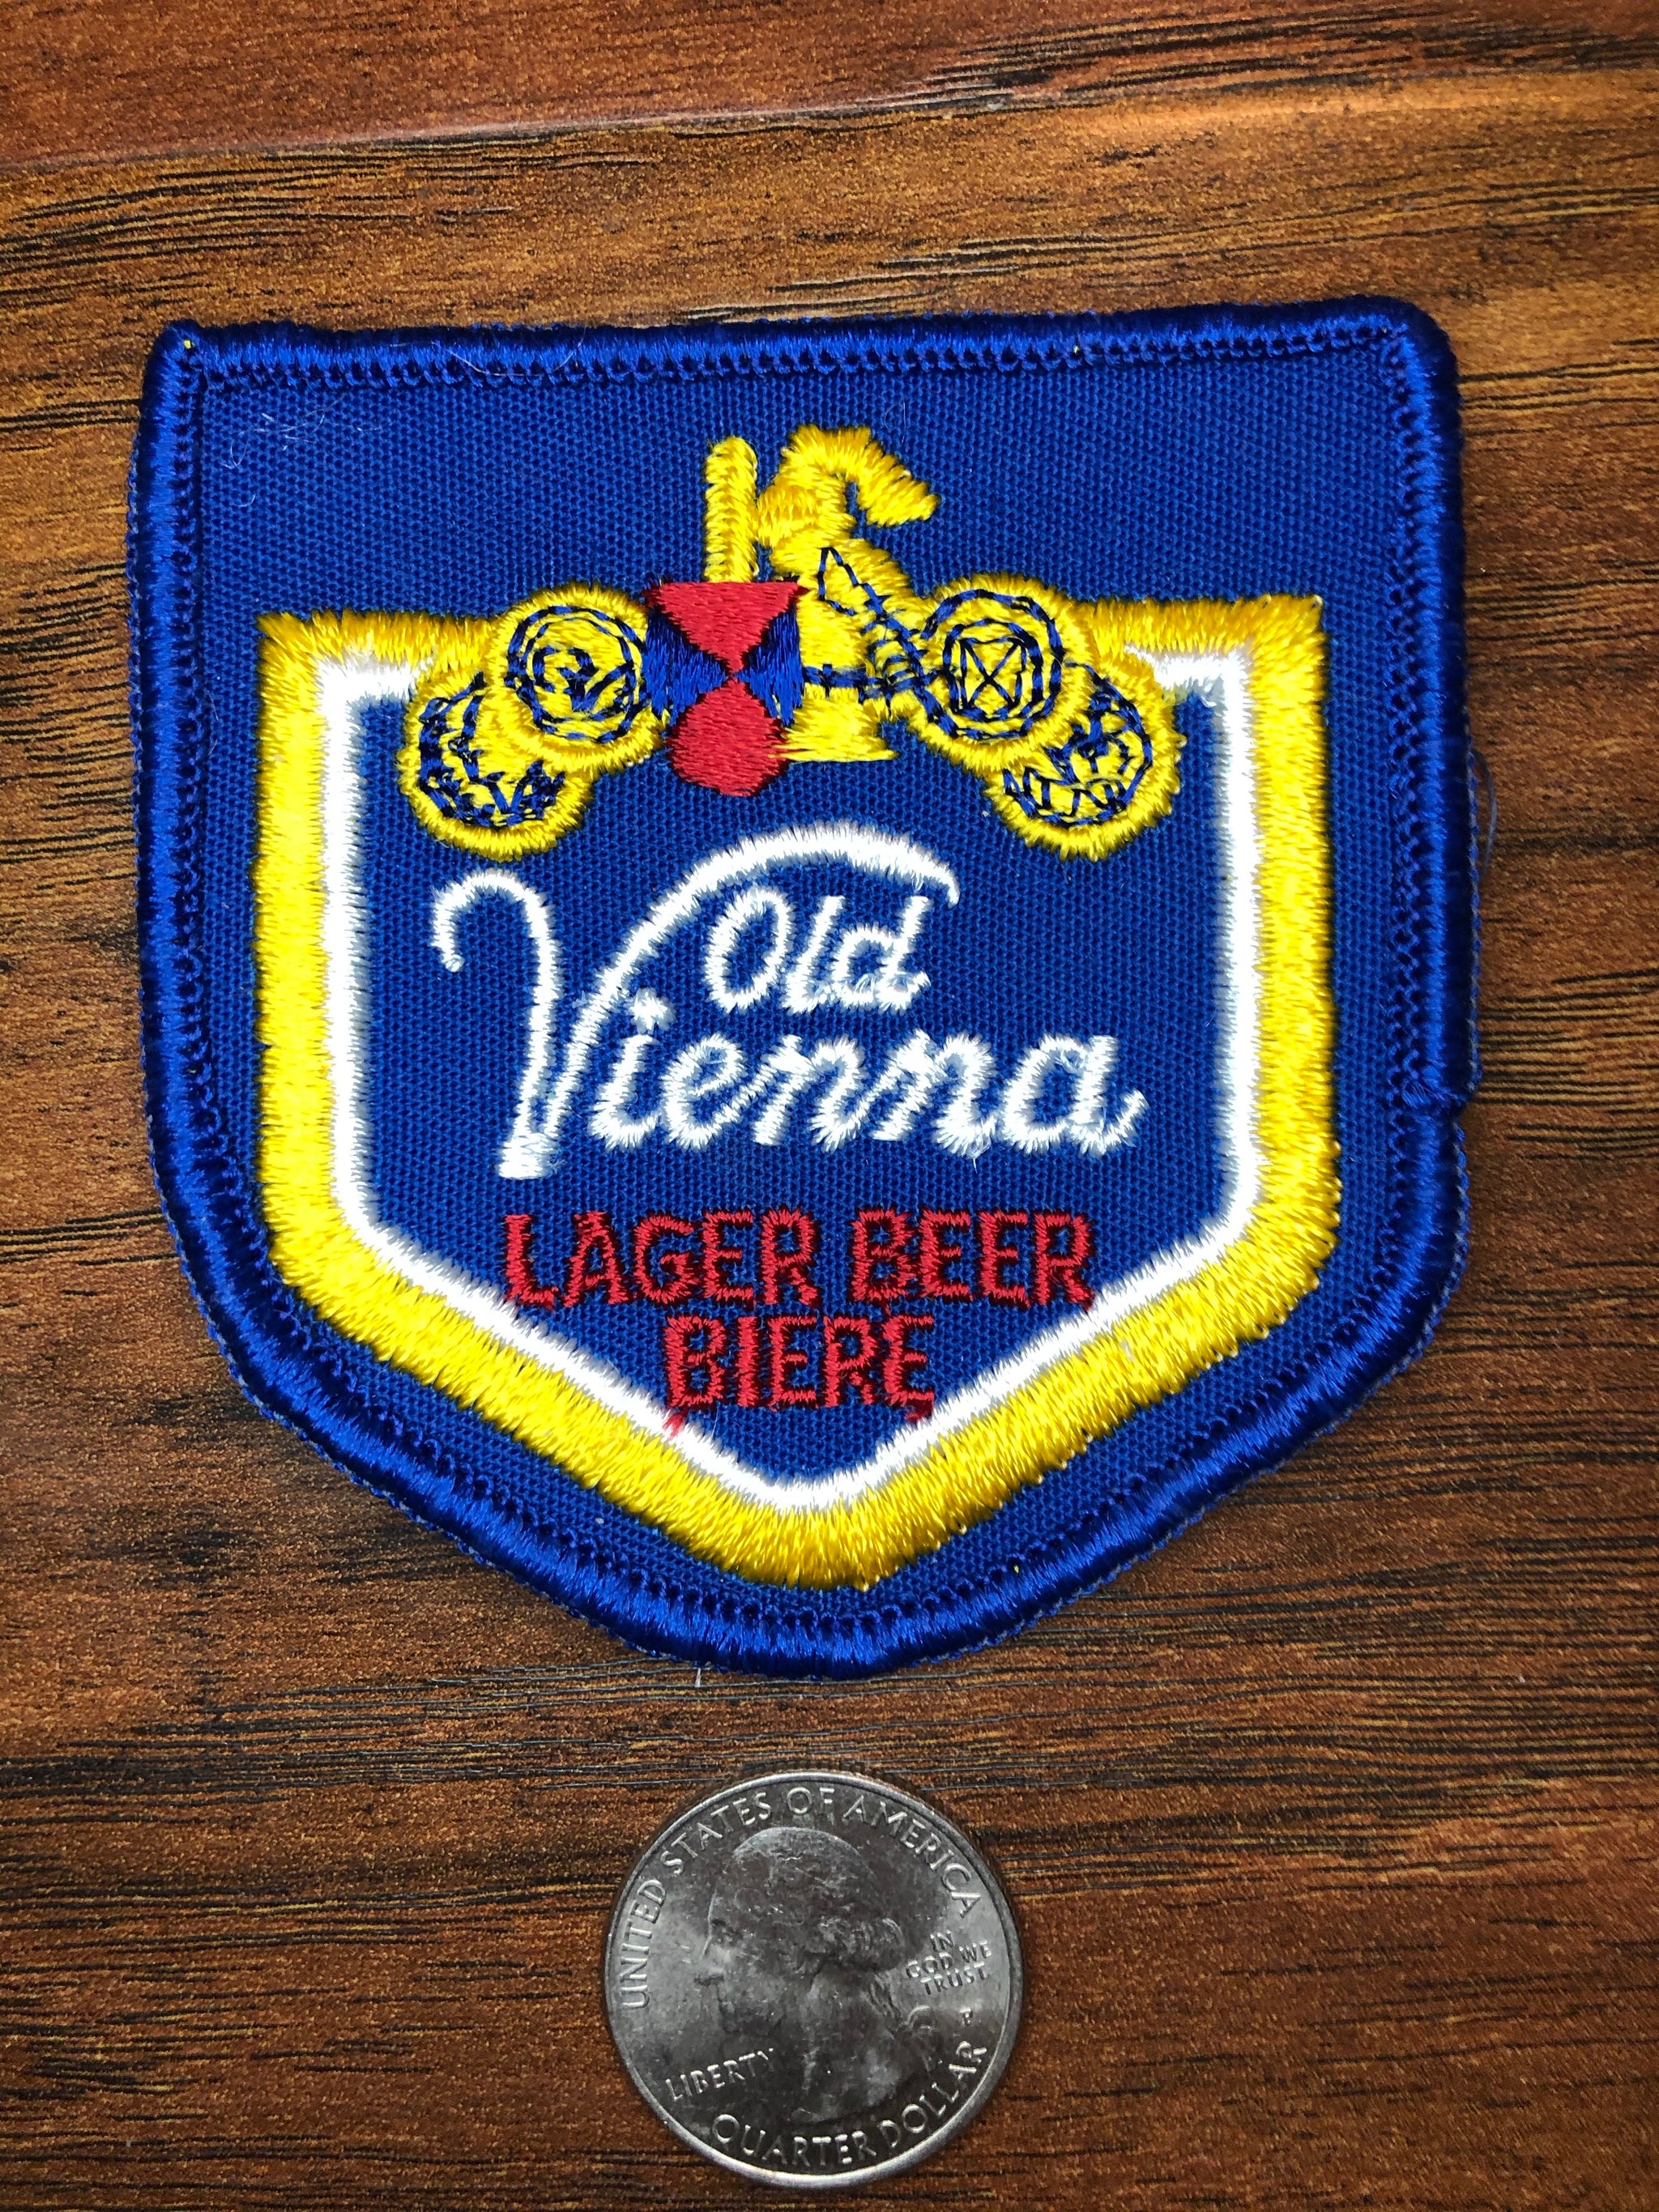 Old Vienna Lager